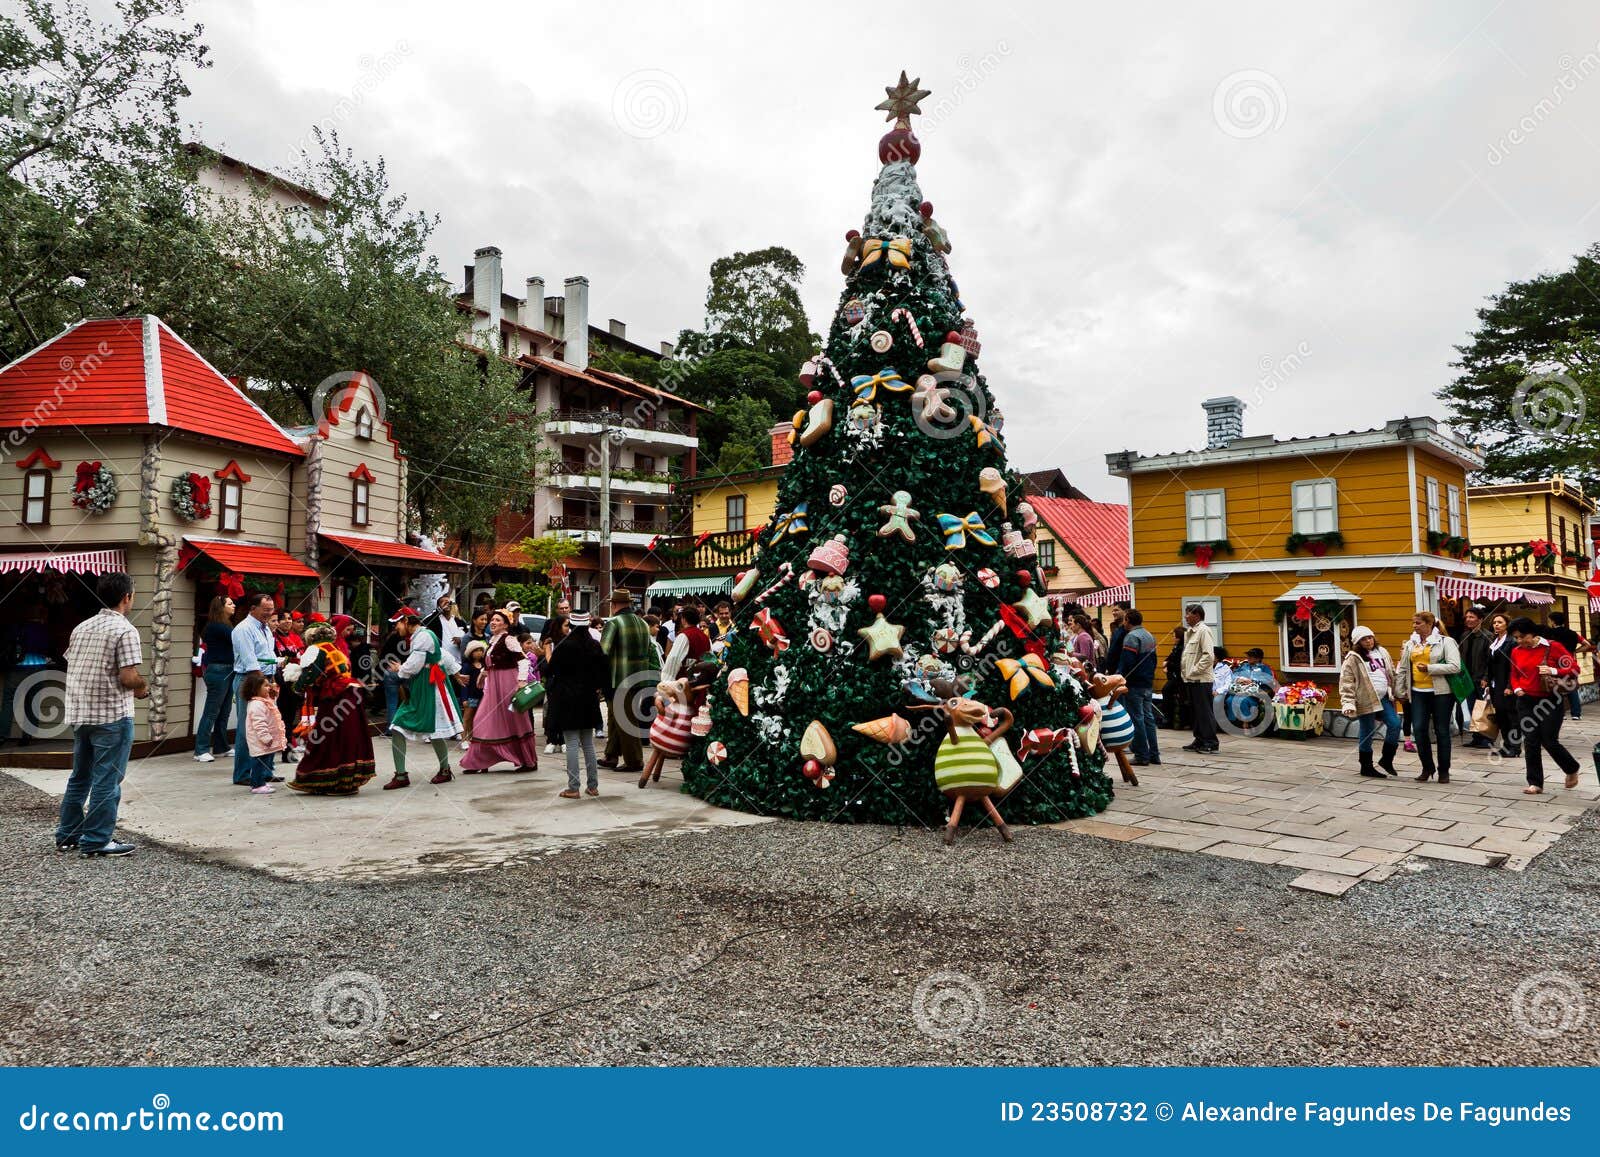 Gramado Christmas Tree South of Brazil Editorial Photography ...